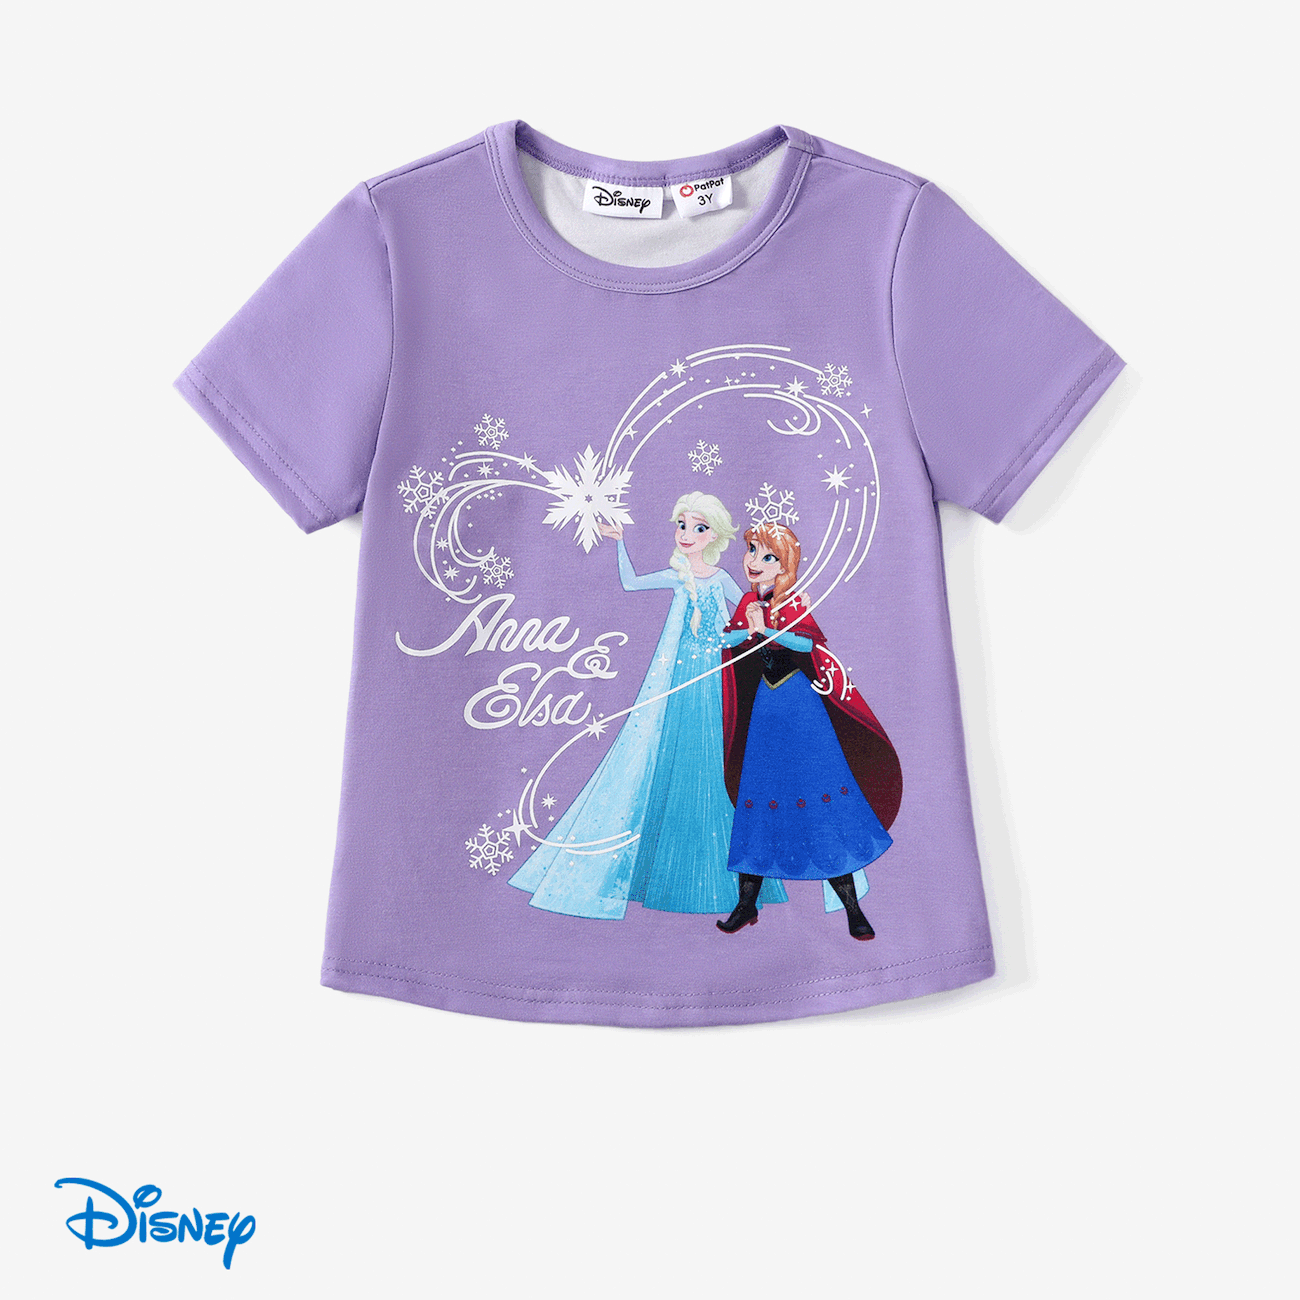 Disney Frozen Toddler Girls Anna/Elsa 1pc Glow in the Dark Magical Snowflake Print T-shirt Purple big image 1